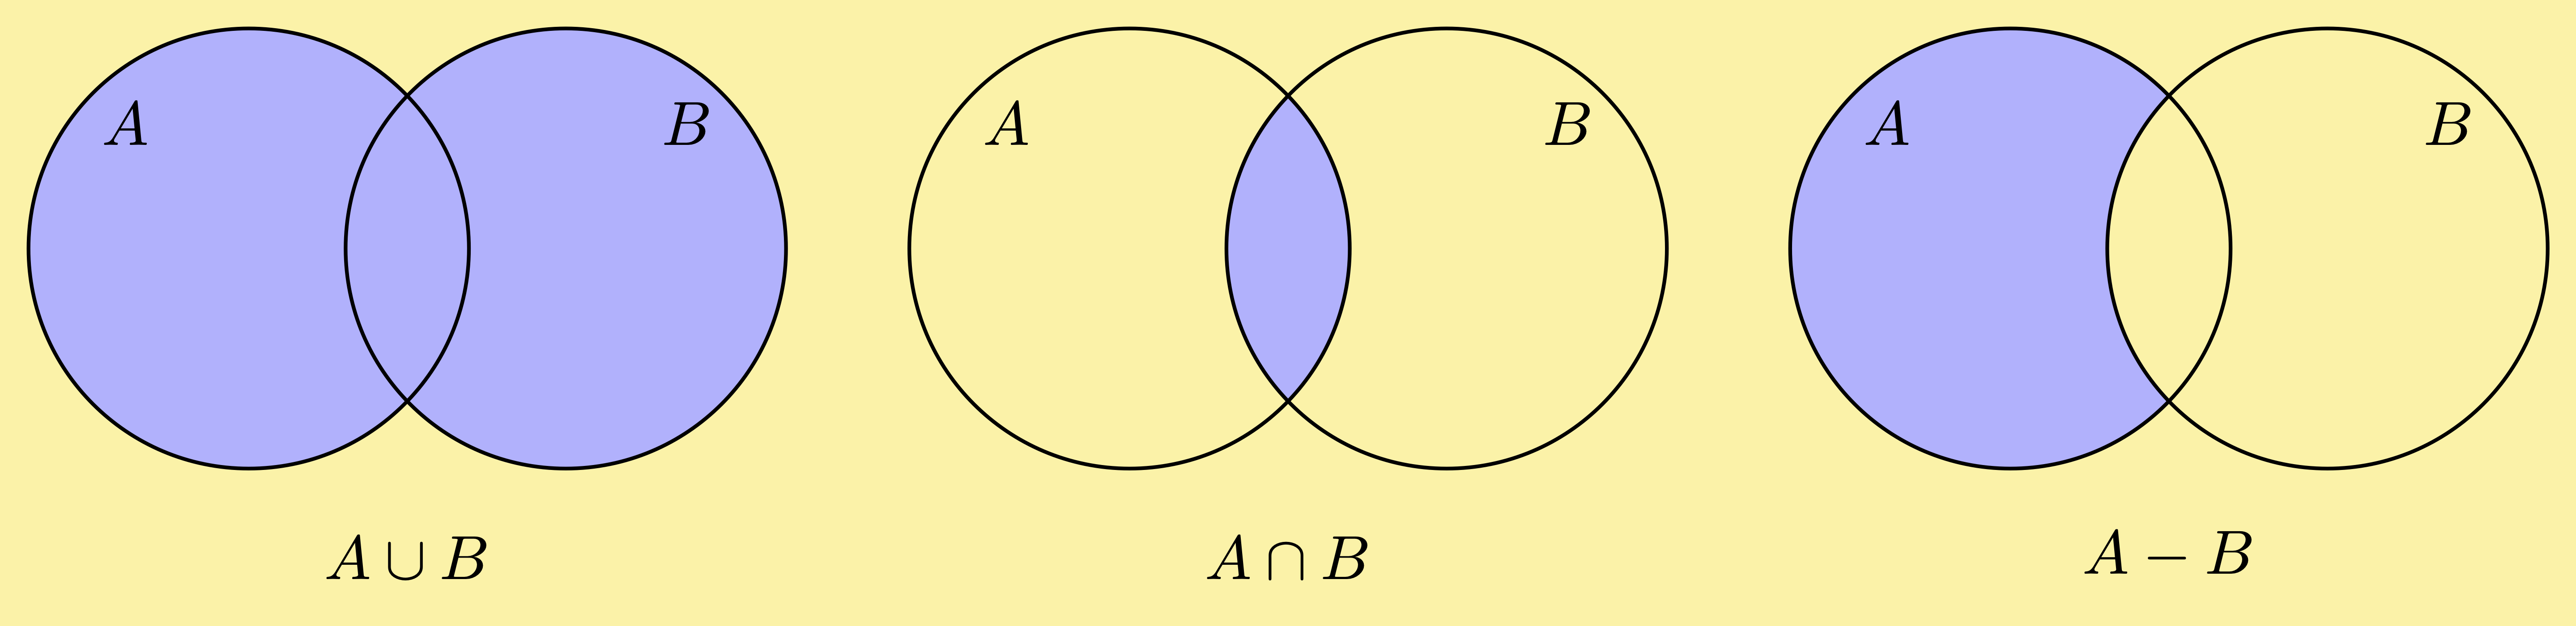 mathematics foundations sets union intersection difference Venn